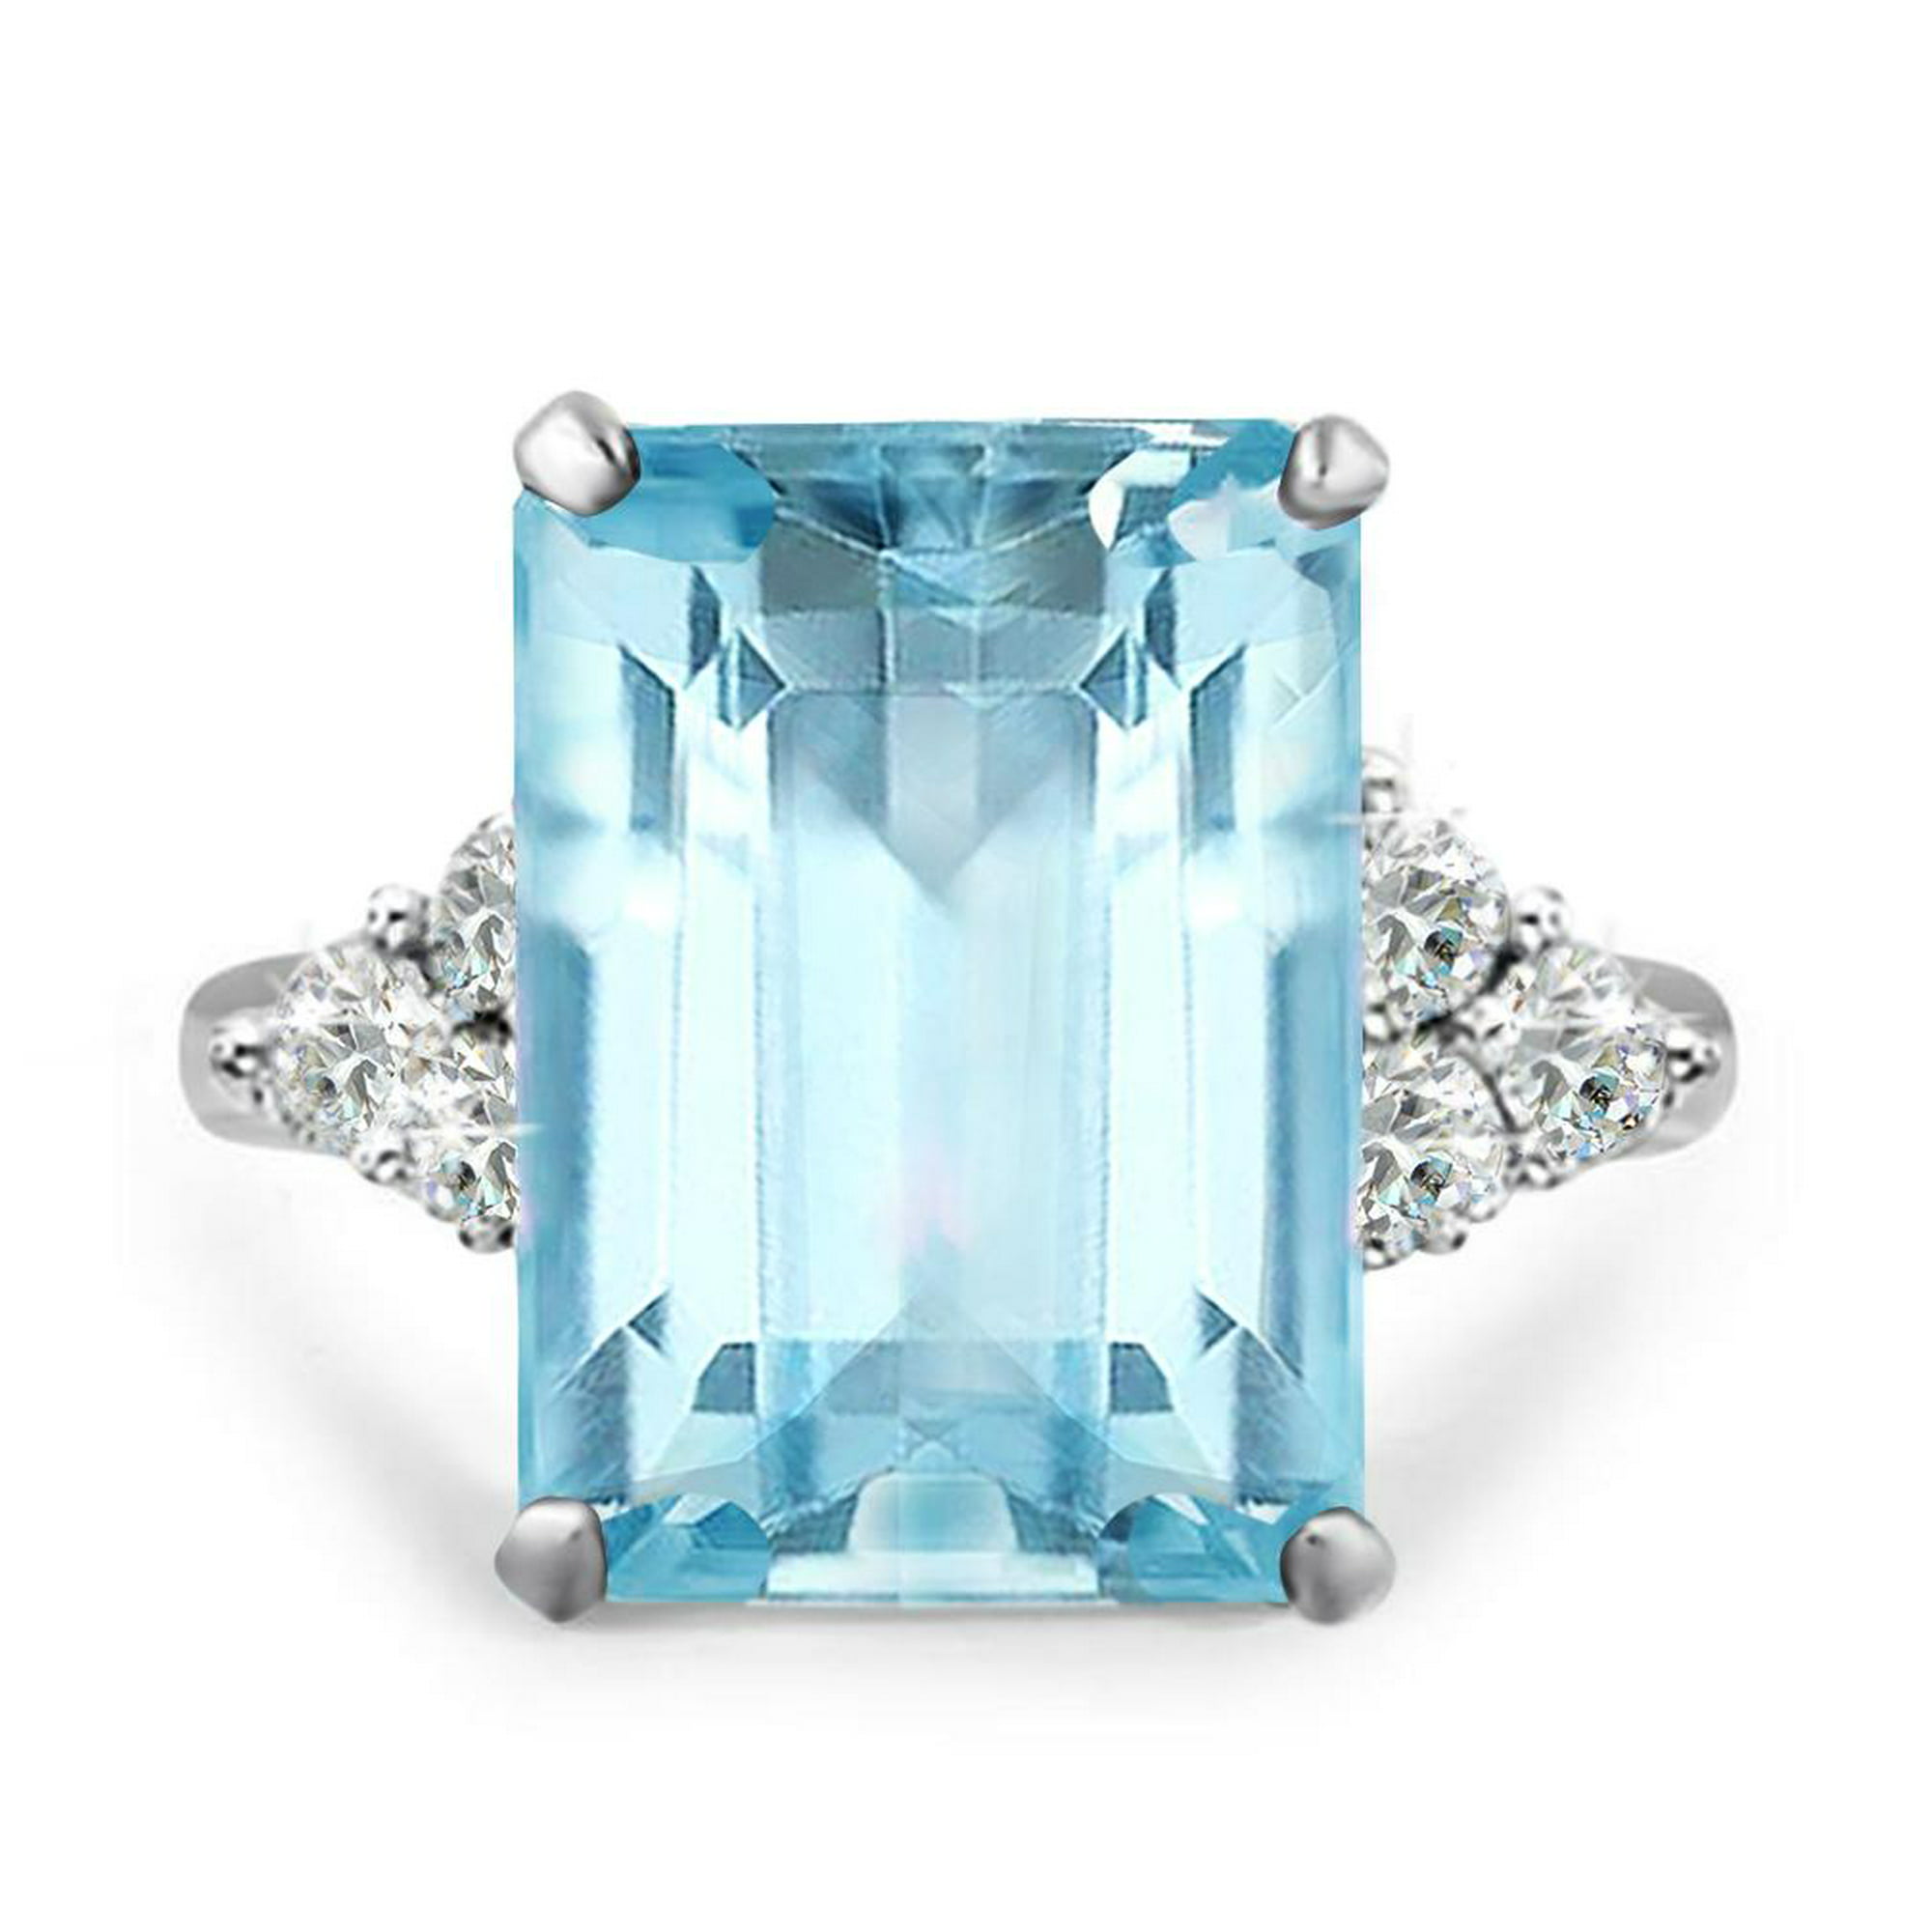 Nu Notesbog Framework Meghan Markle & Princess Diana 20ctw Emerald Cut Aquamarine Color Cocktail  Ring Inspired by Royal Wedding - Walmart.com